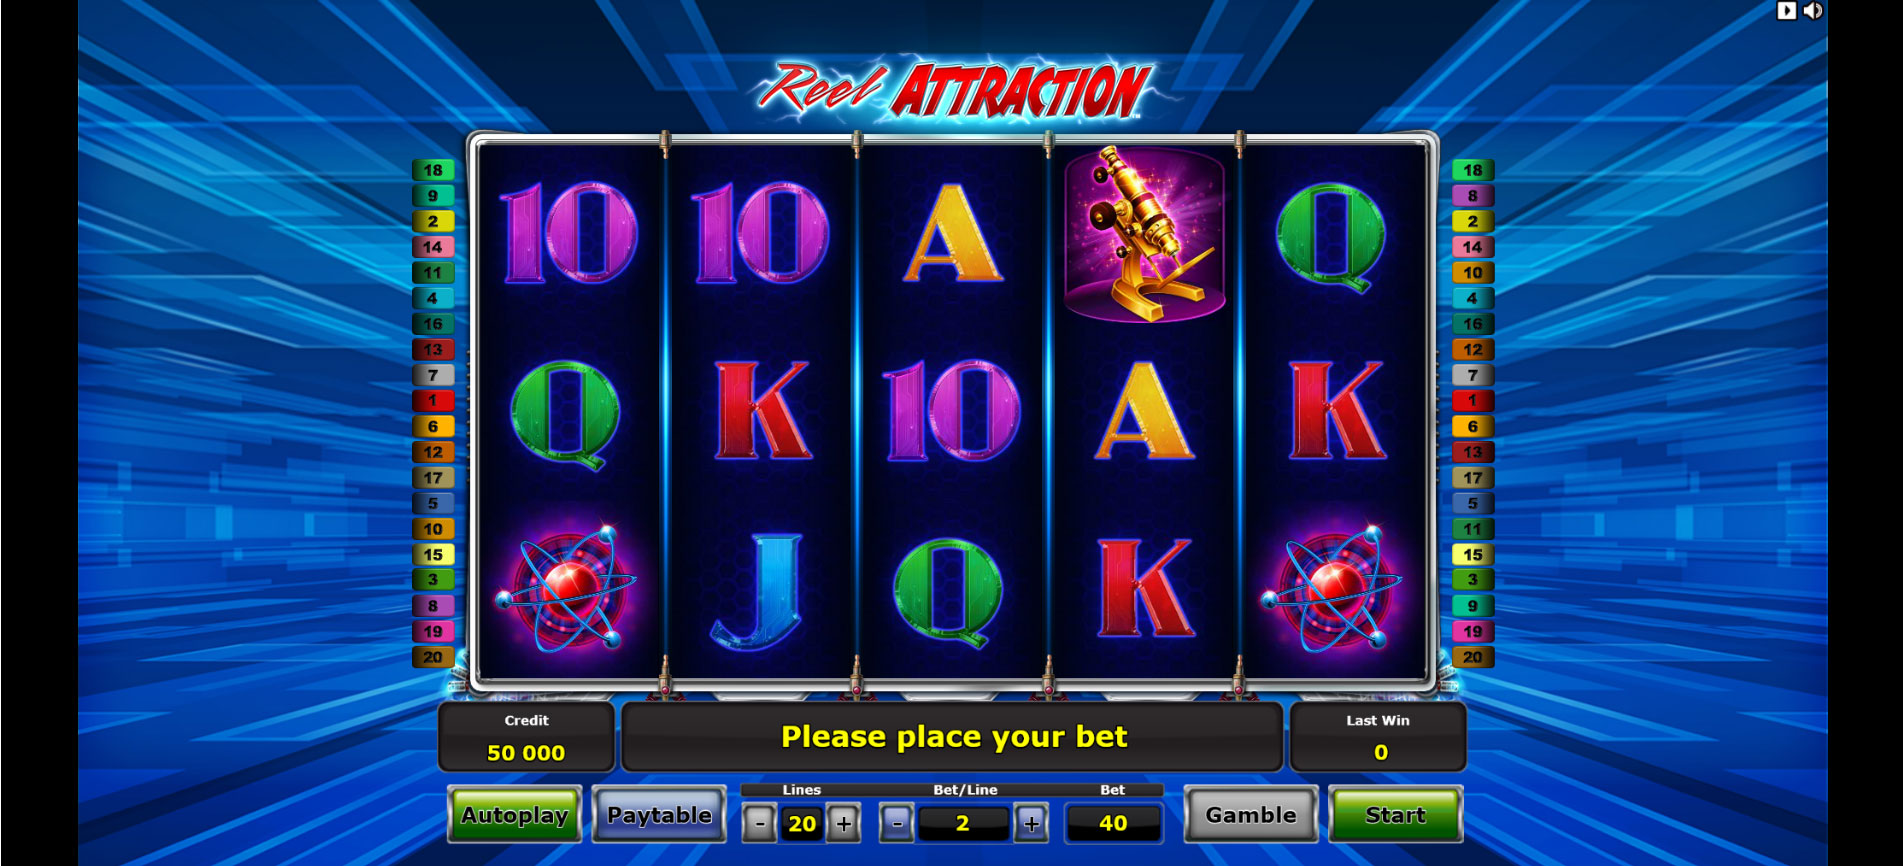 griglia del gioco slot online Reel Attraction